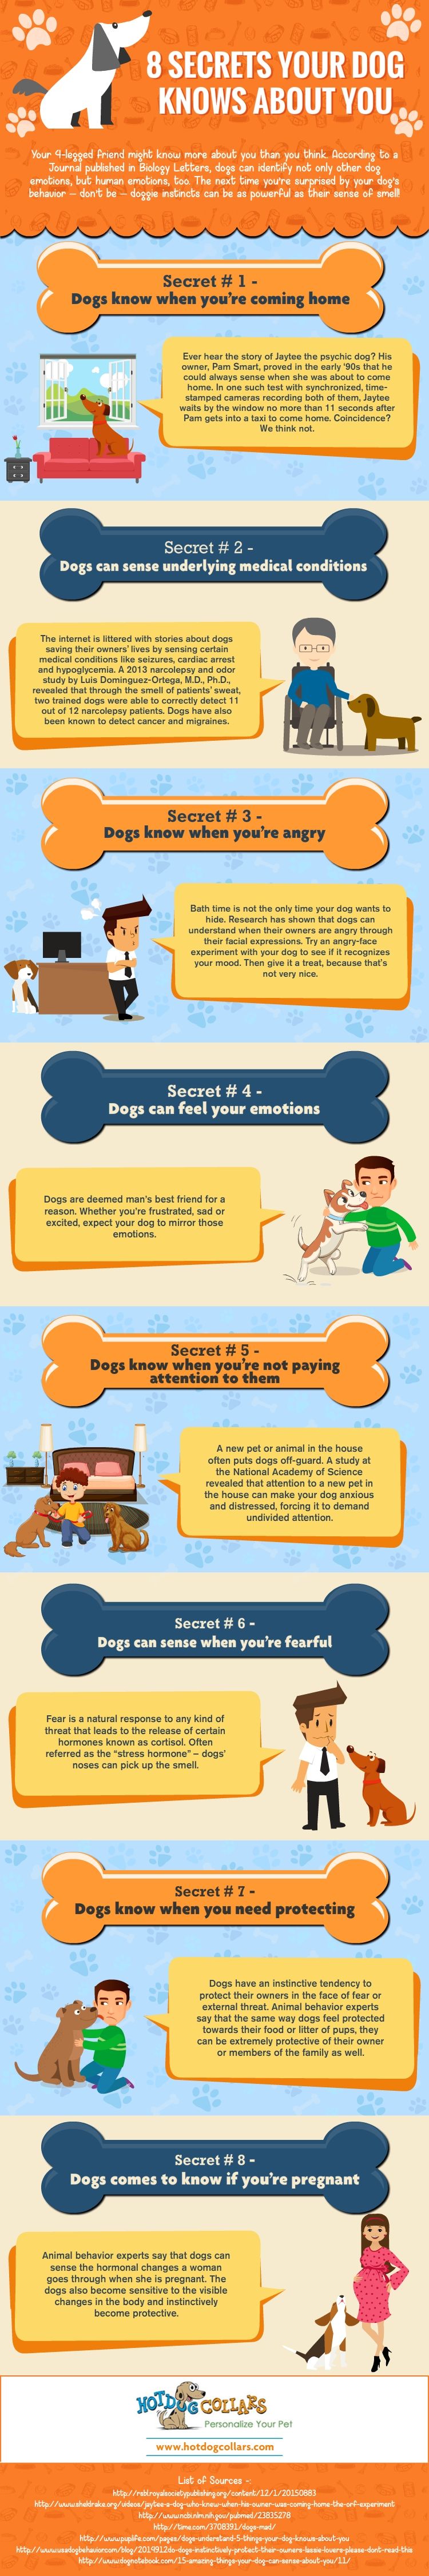 Secrets your dog knows